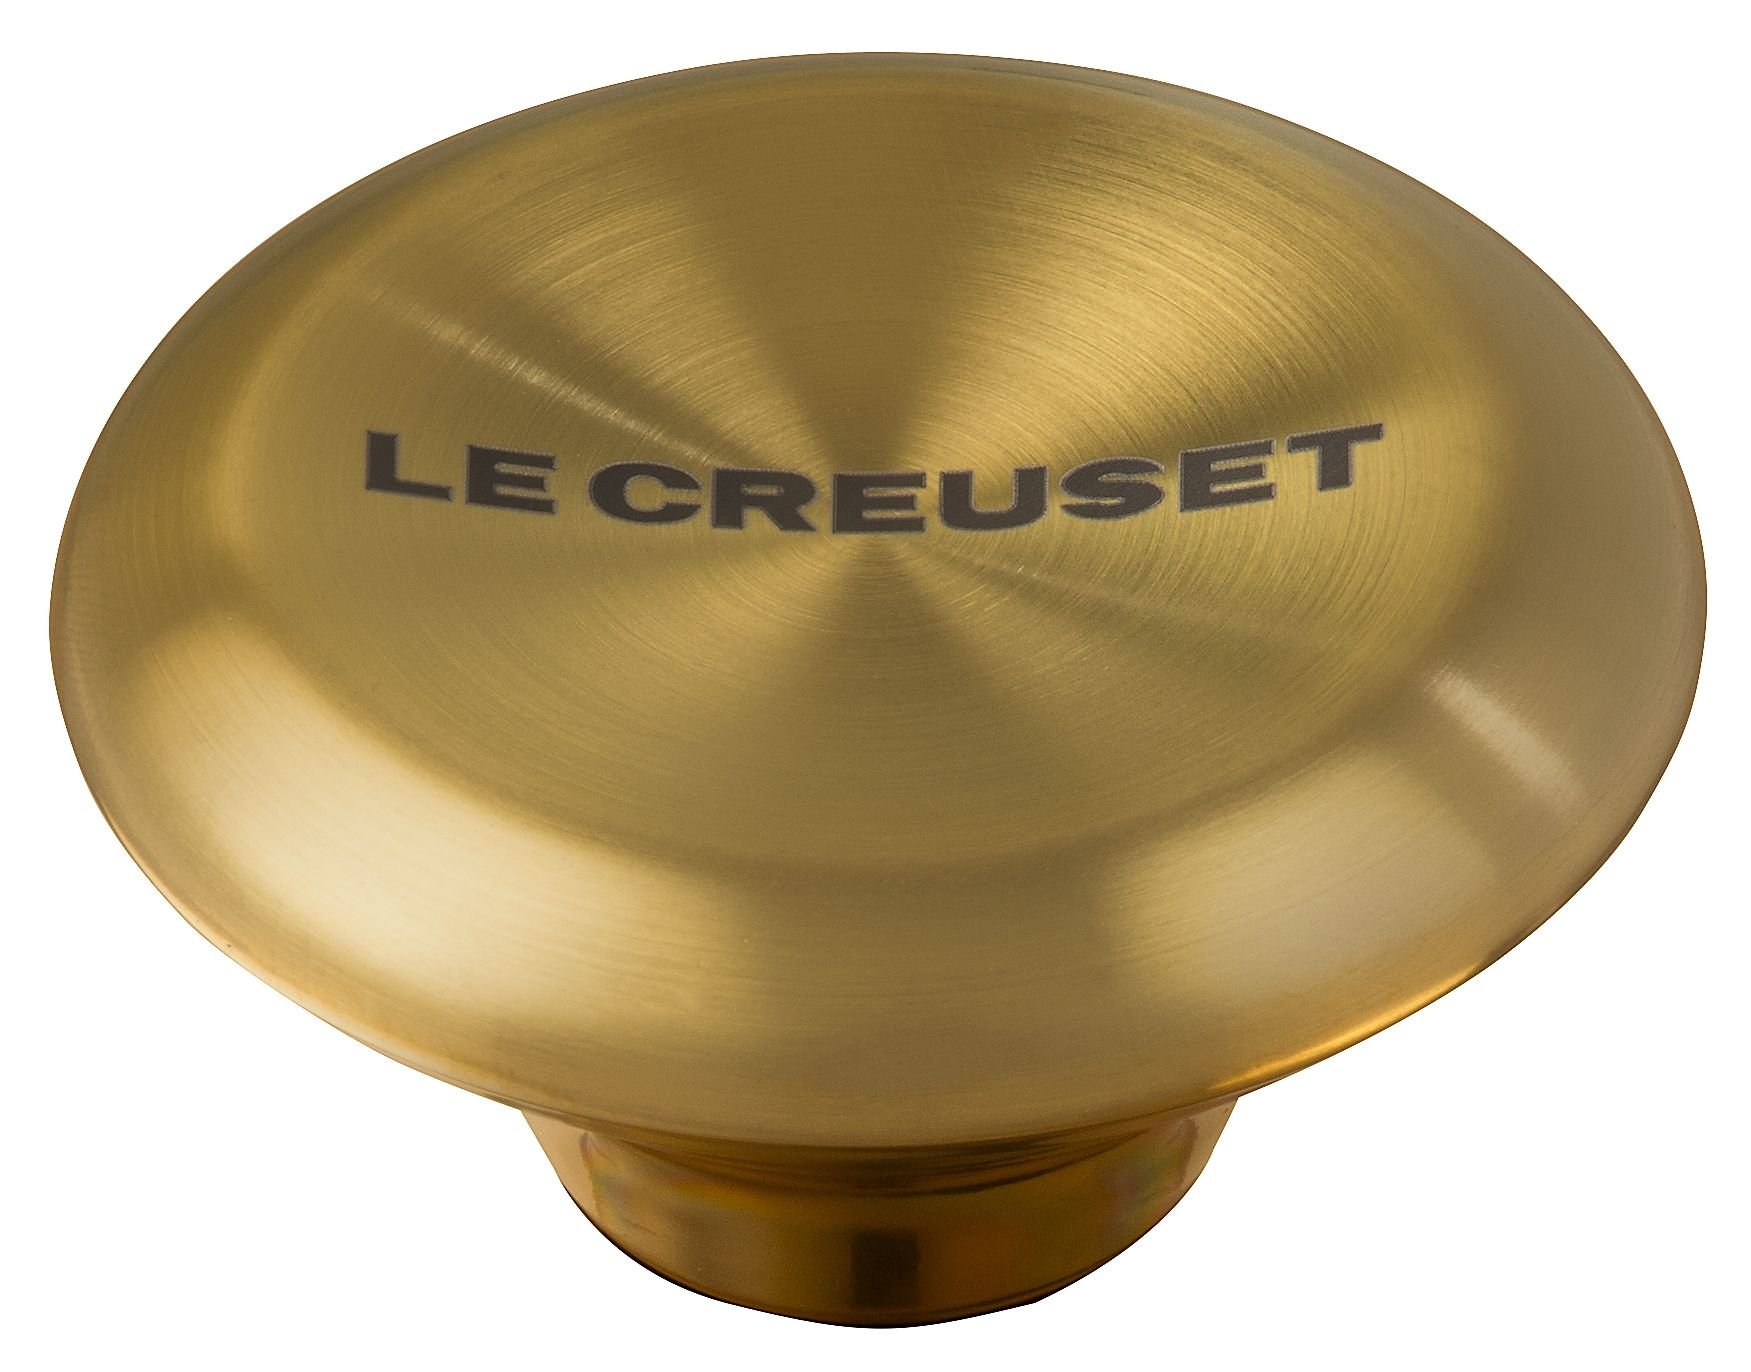 Le Creuset Bear stainless steel knob light gold for signature model pot New